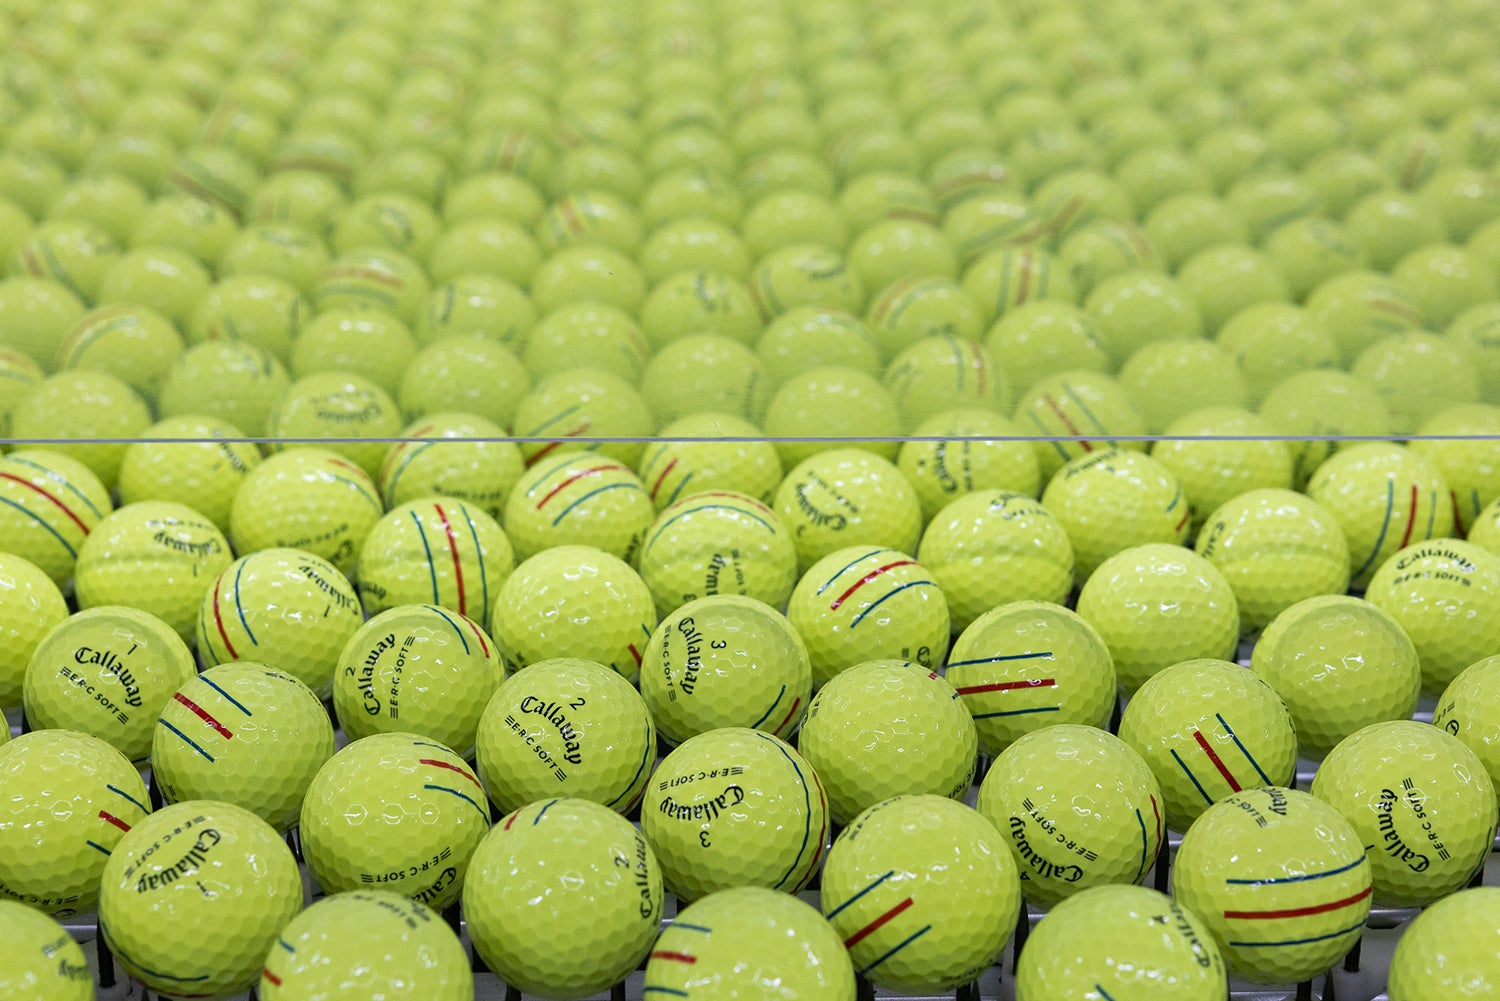 finished golf balls